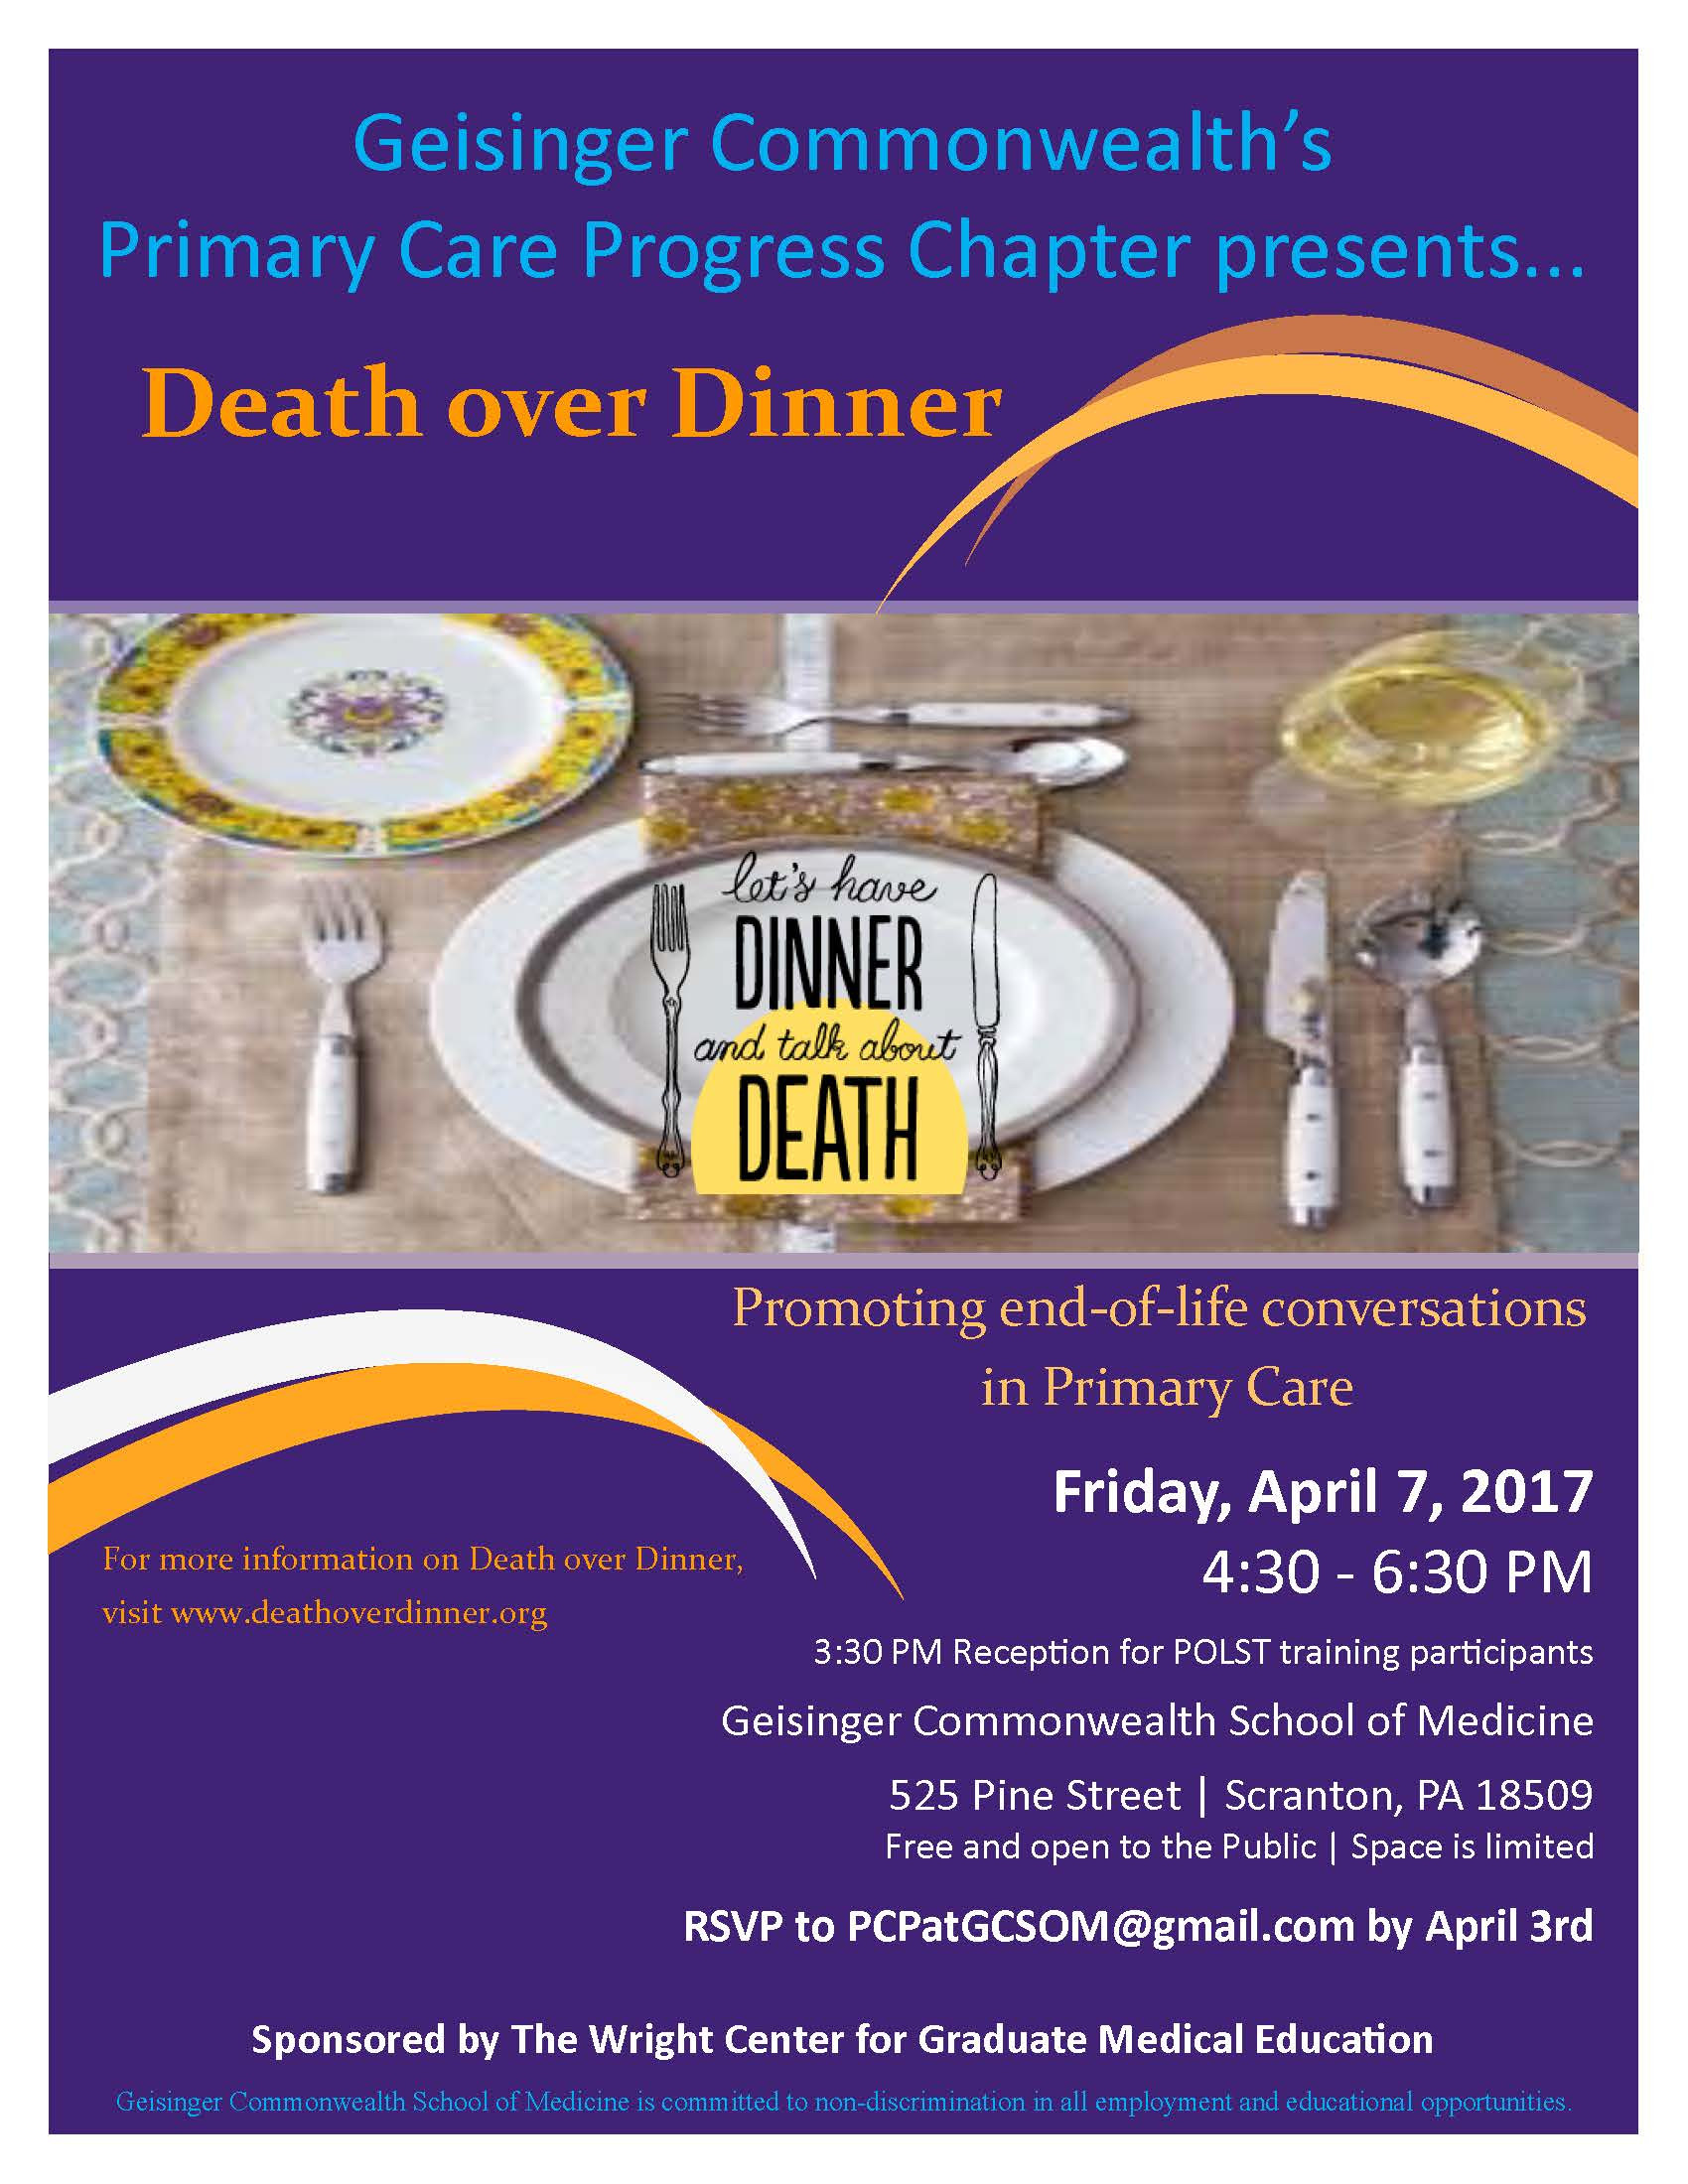 Death Over Dinner
 "Death over Dinner" Event